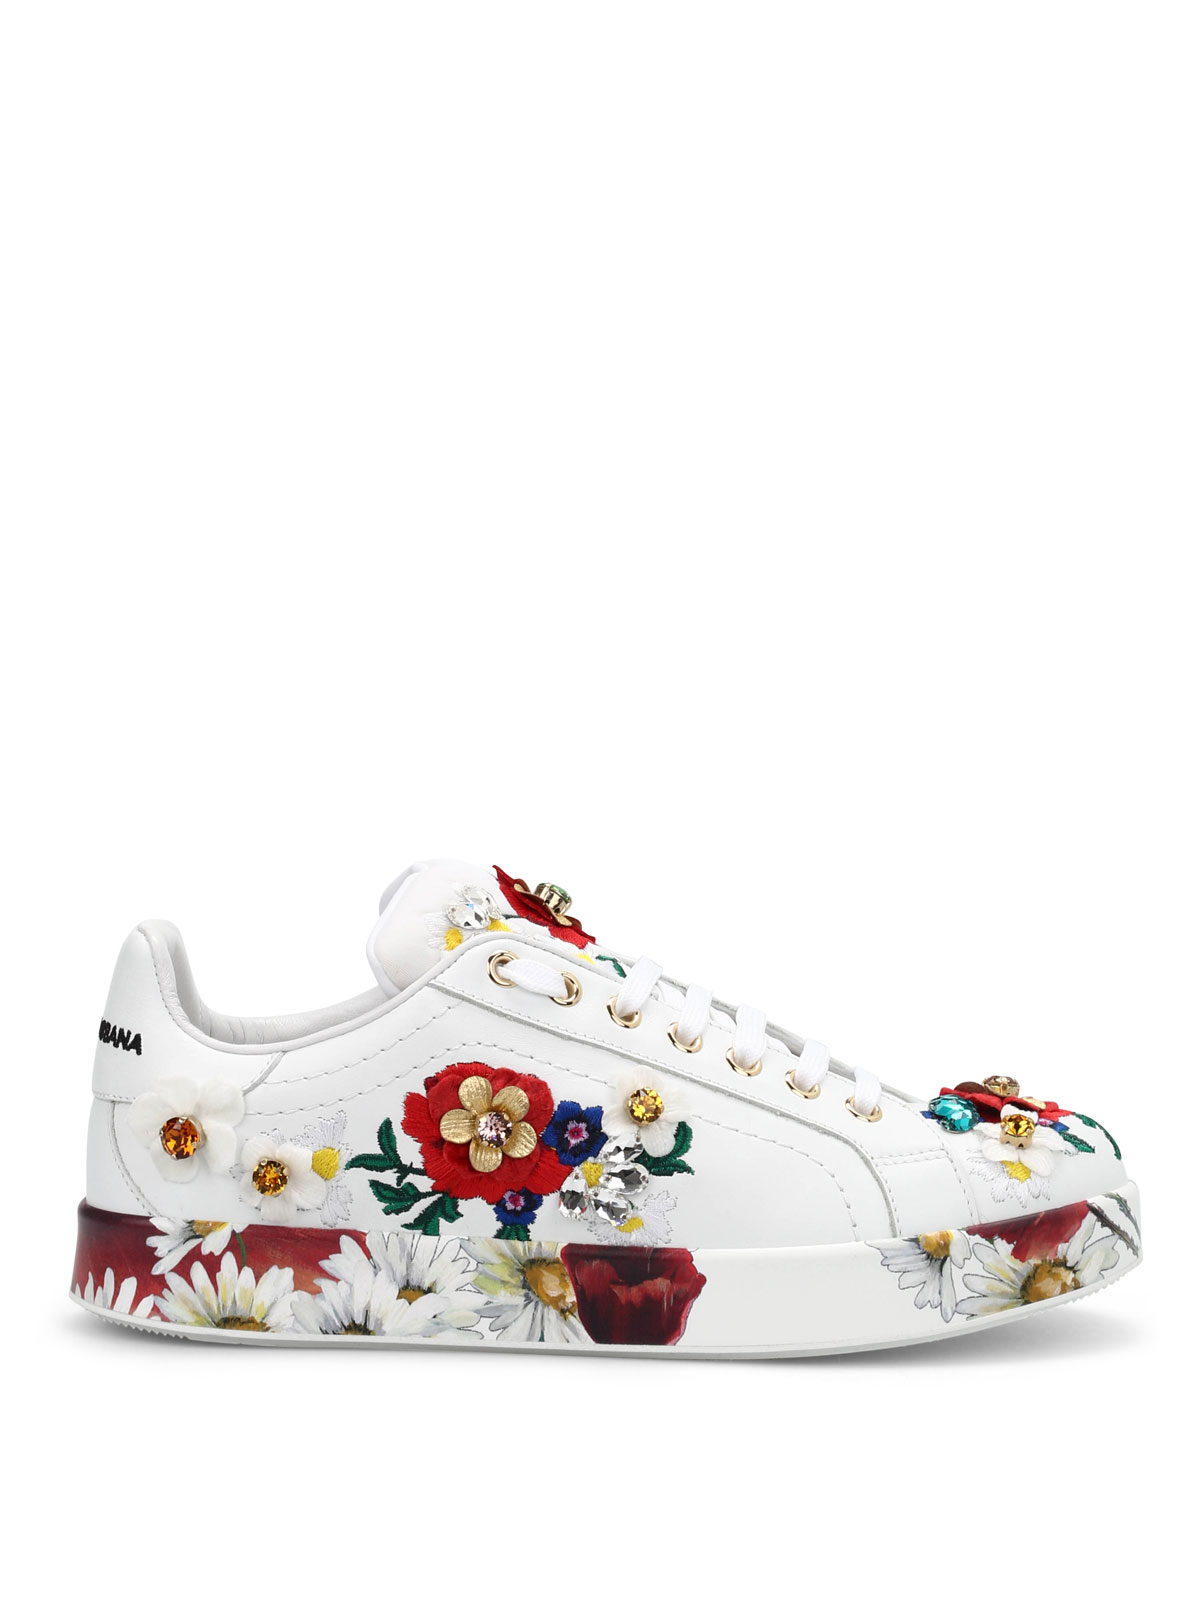 Dolce \u0026 Gabbana - Floral embroidered 